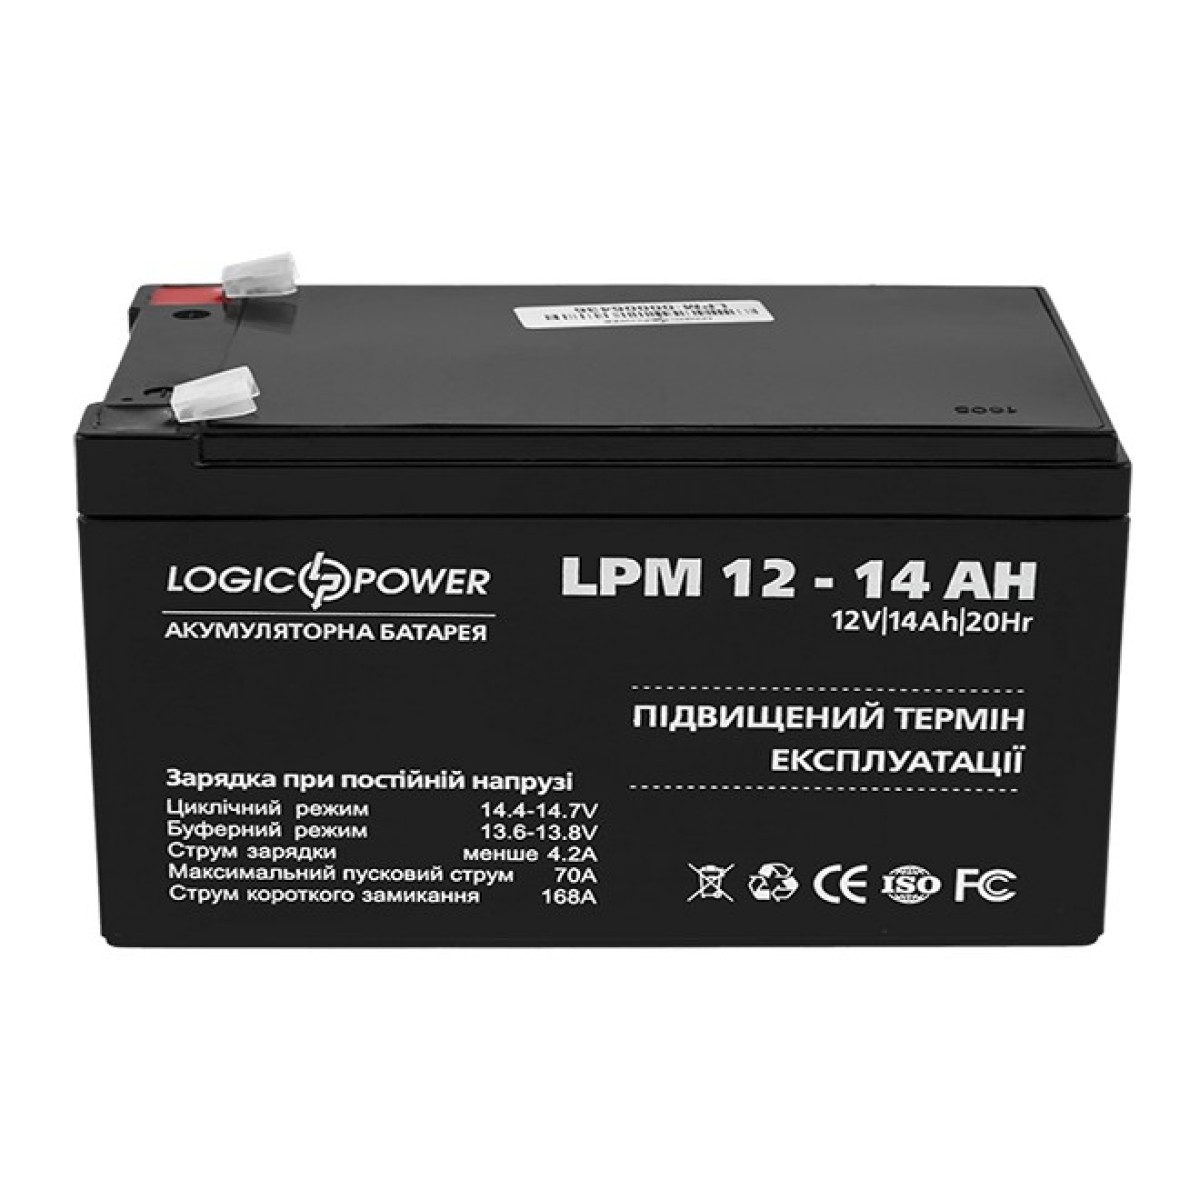 Аккумулятор AGM LPM 12 - 14 AH - фото 2